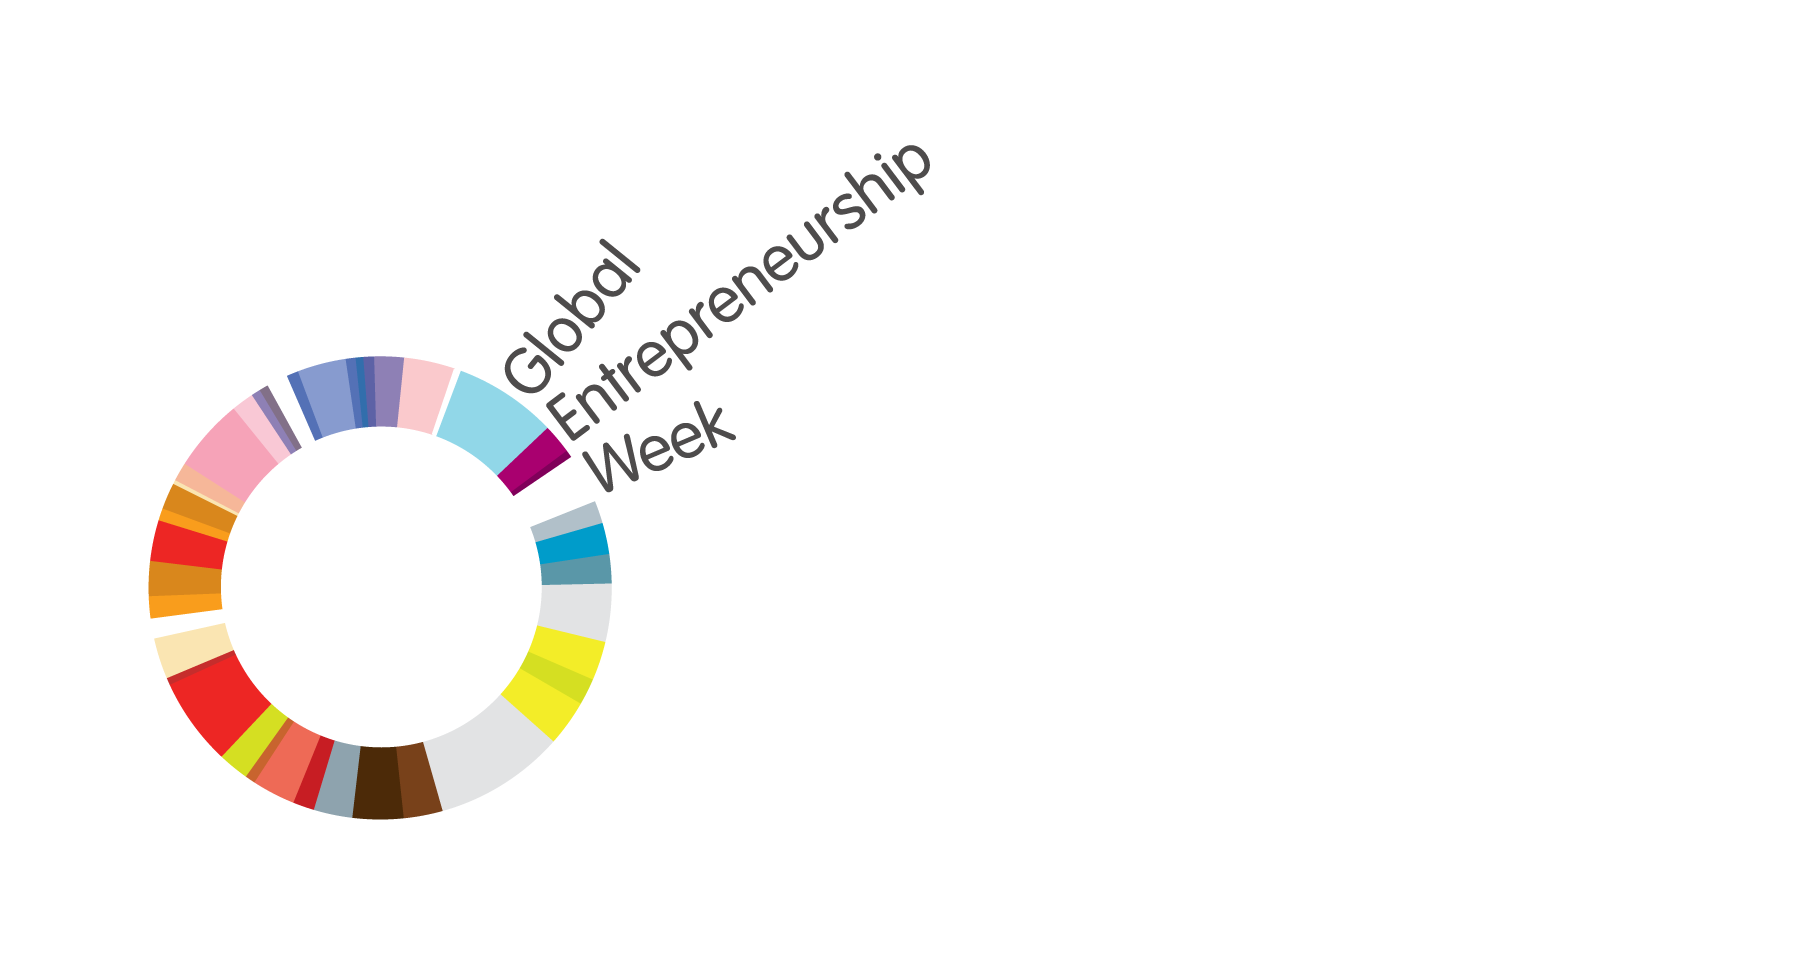 Coast shines for Global Entrepreneurship Week